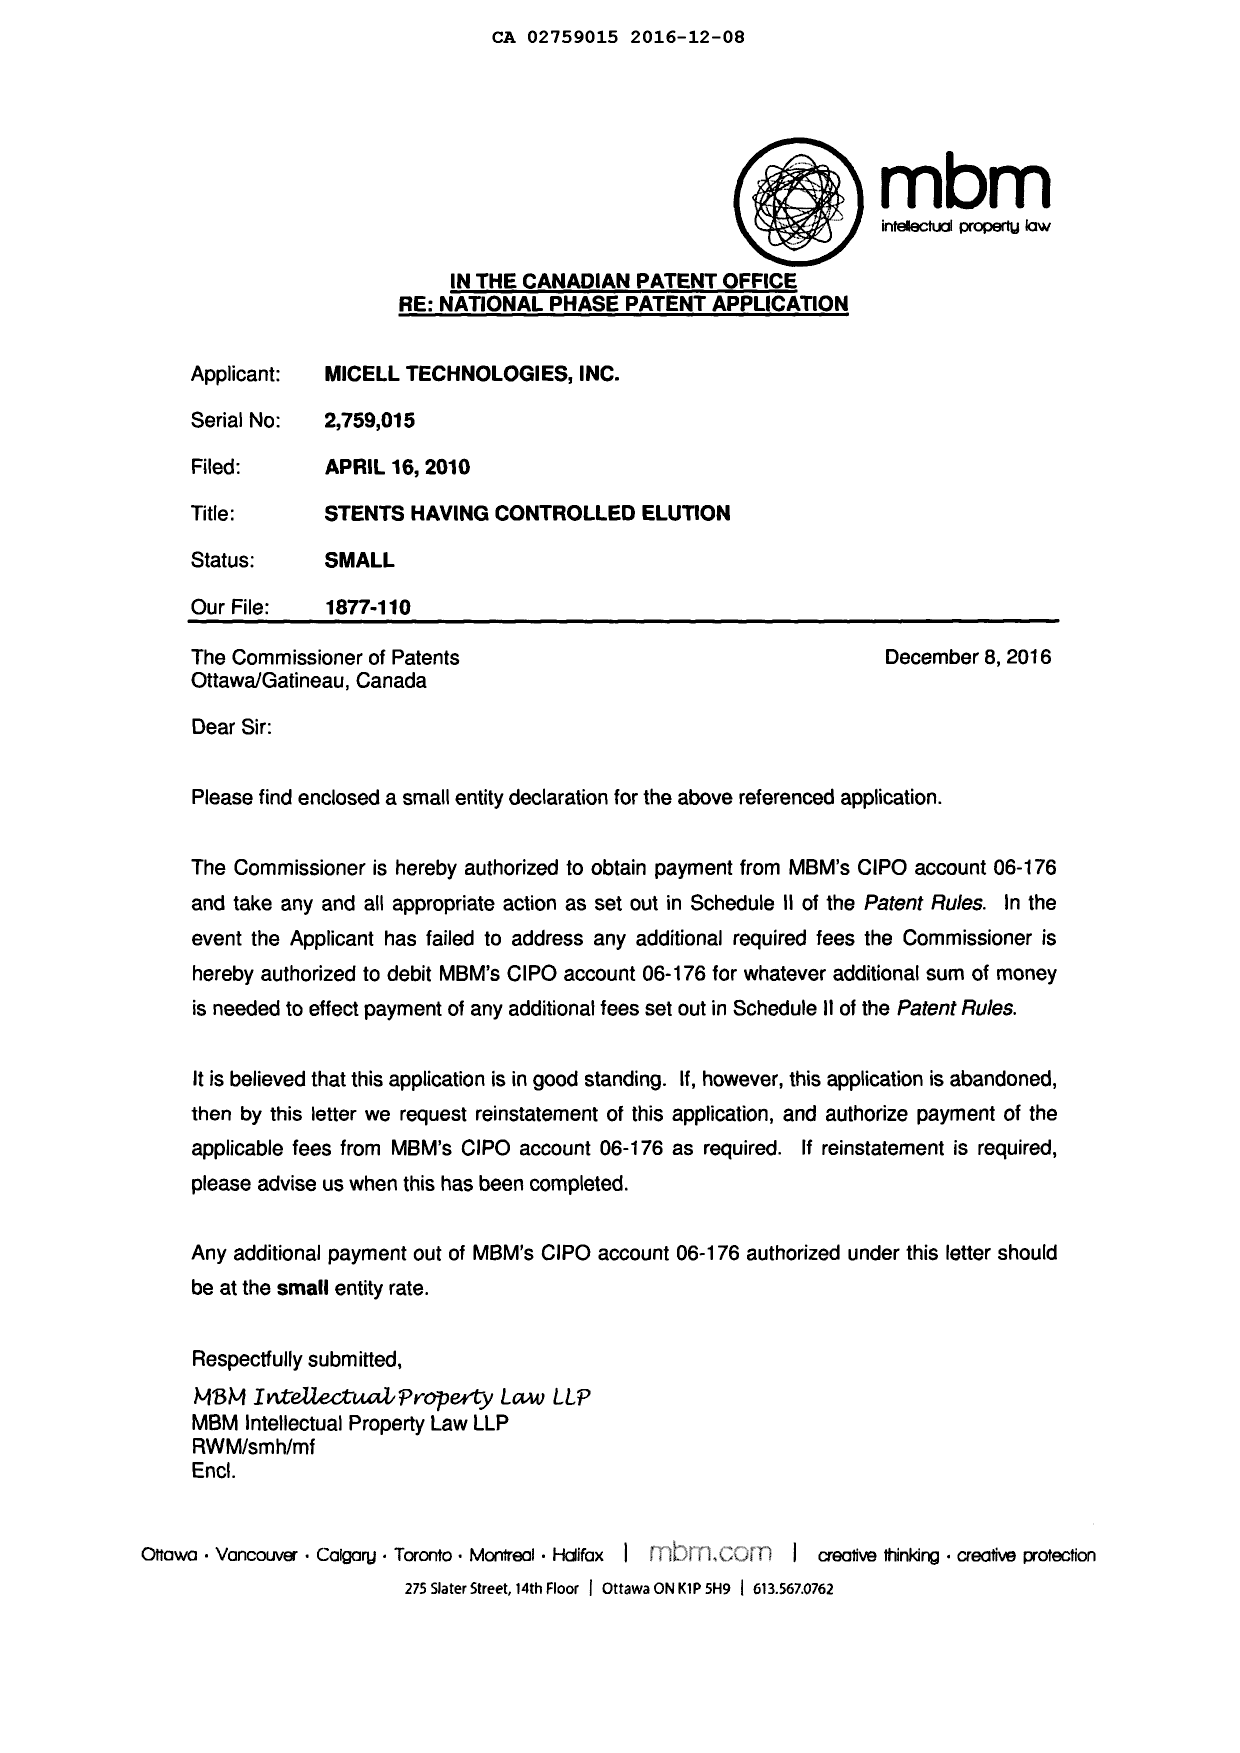 Canadian Patent Document 2759015. Correspondence 20151208. Image 2 of 3